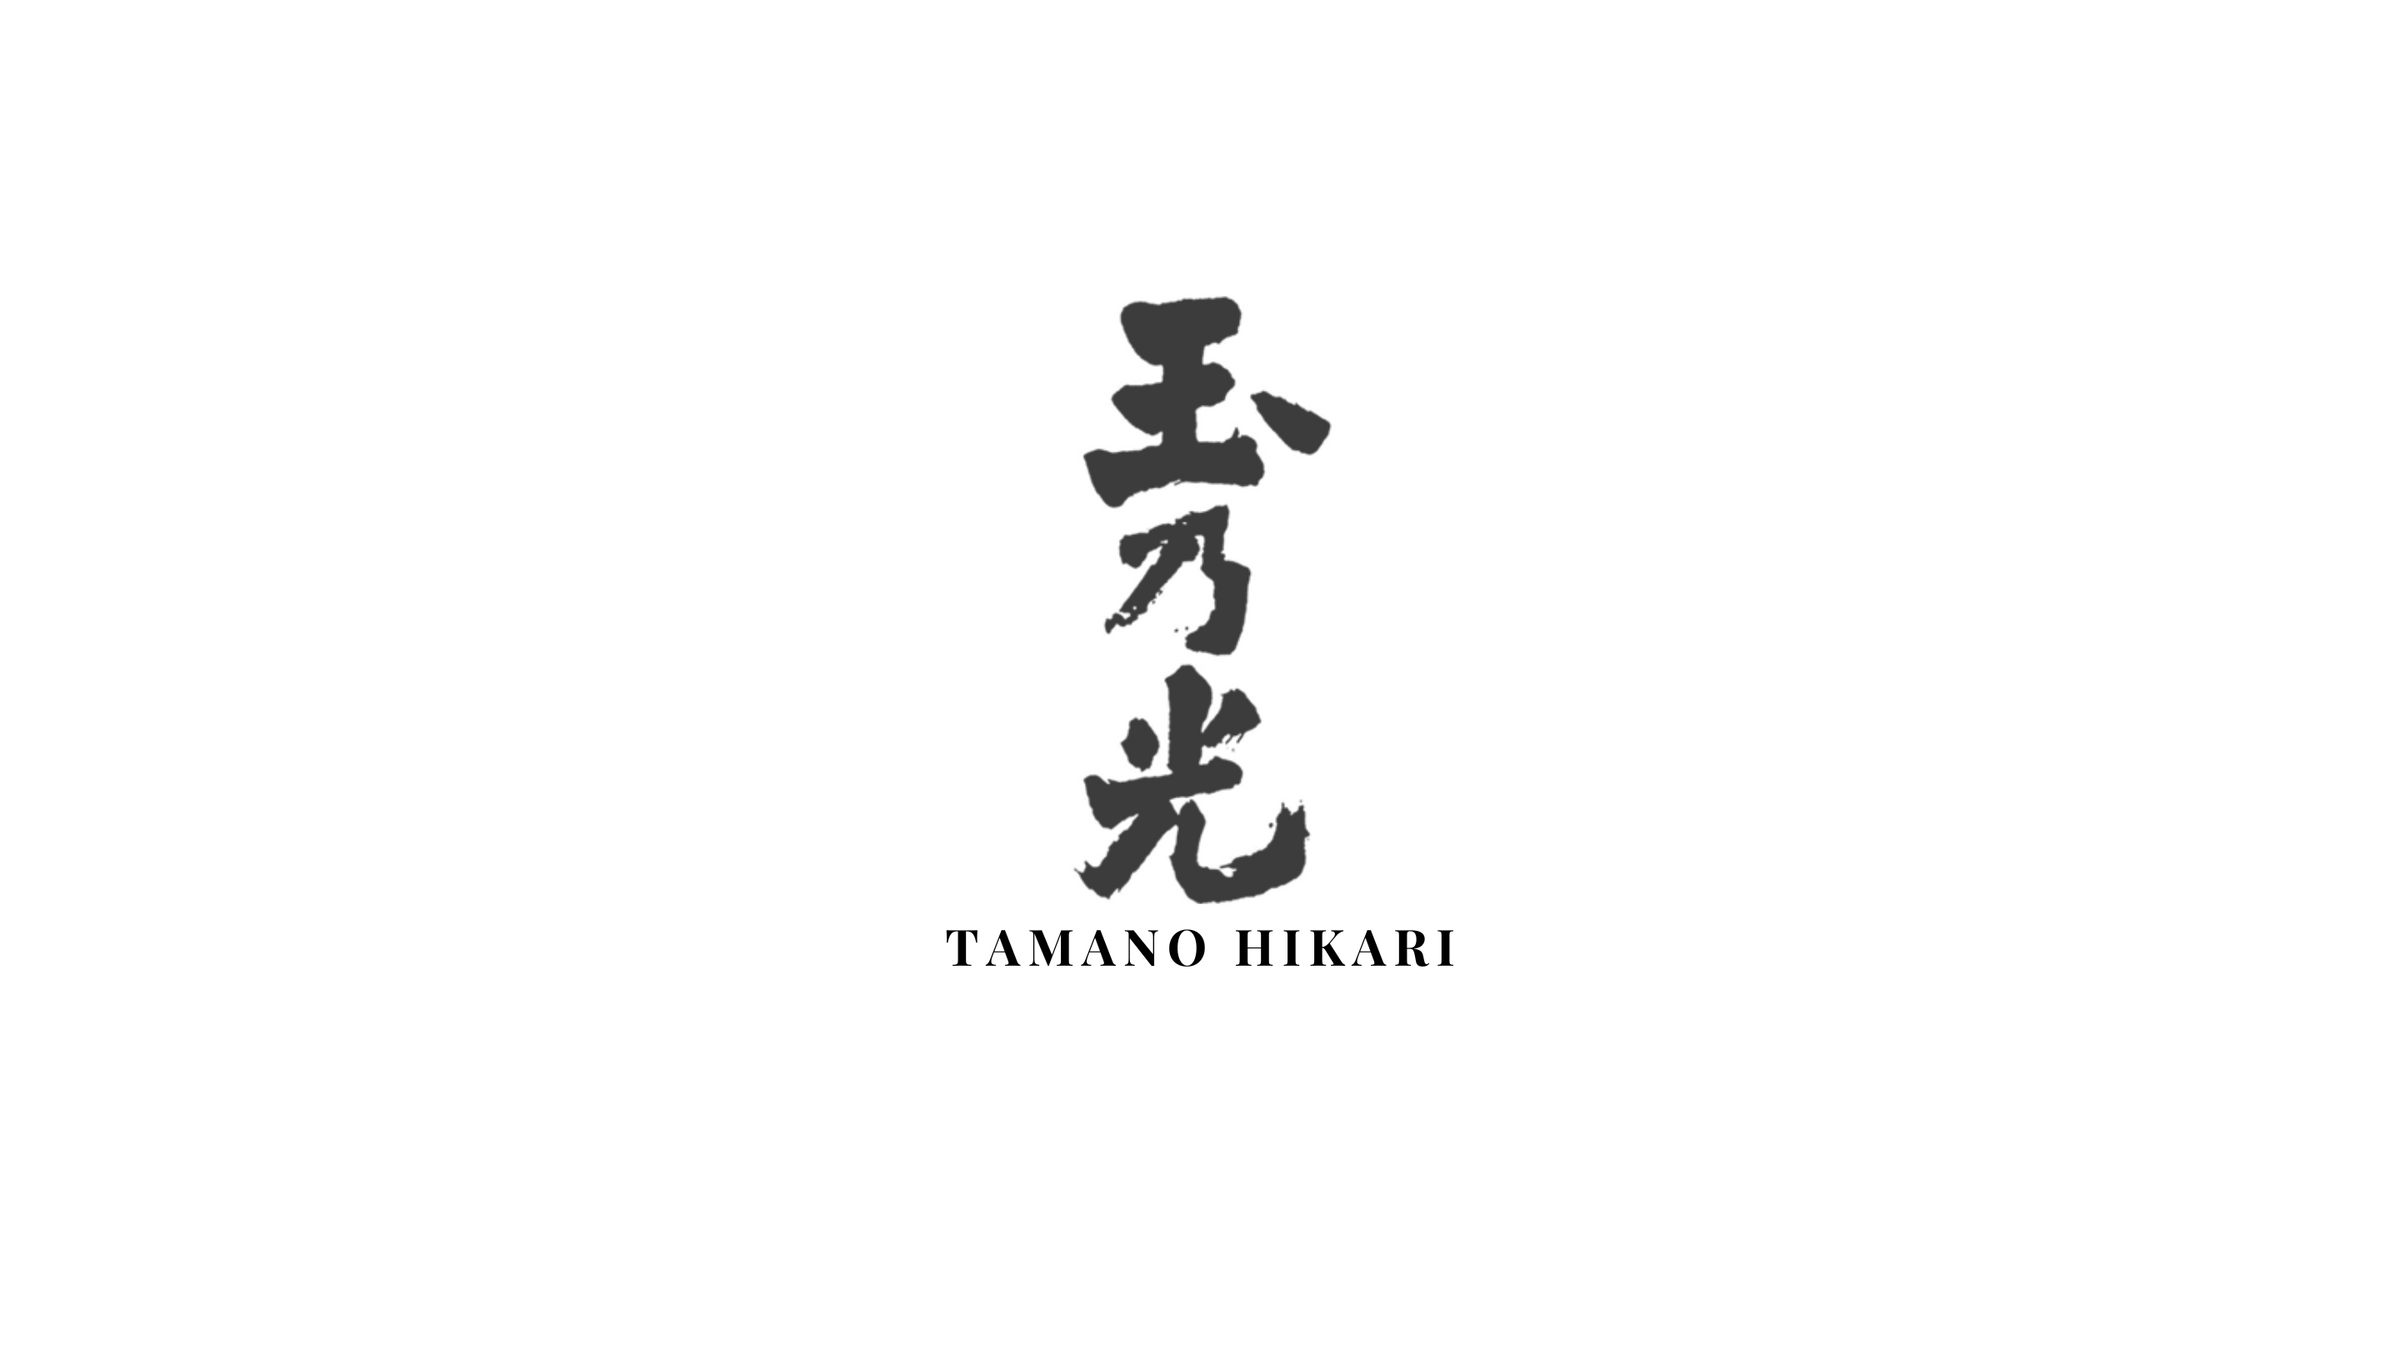 Tamano Hikari Brewery